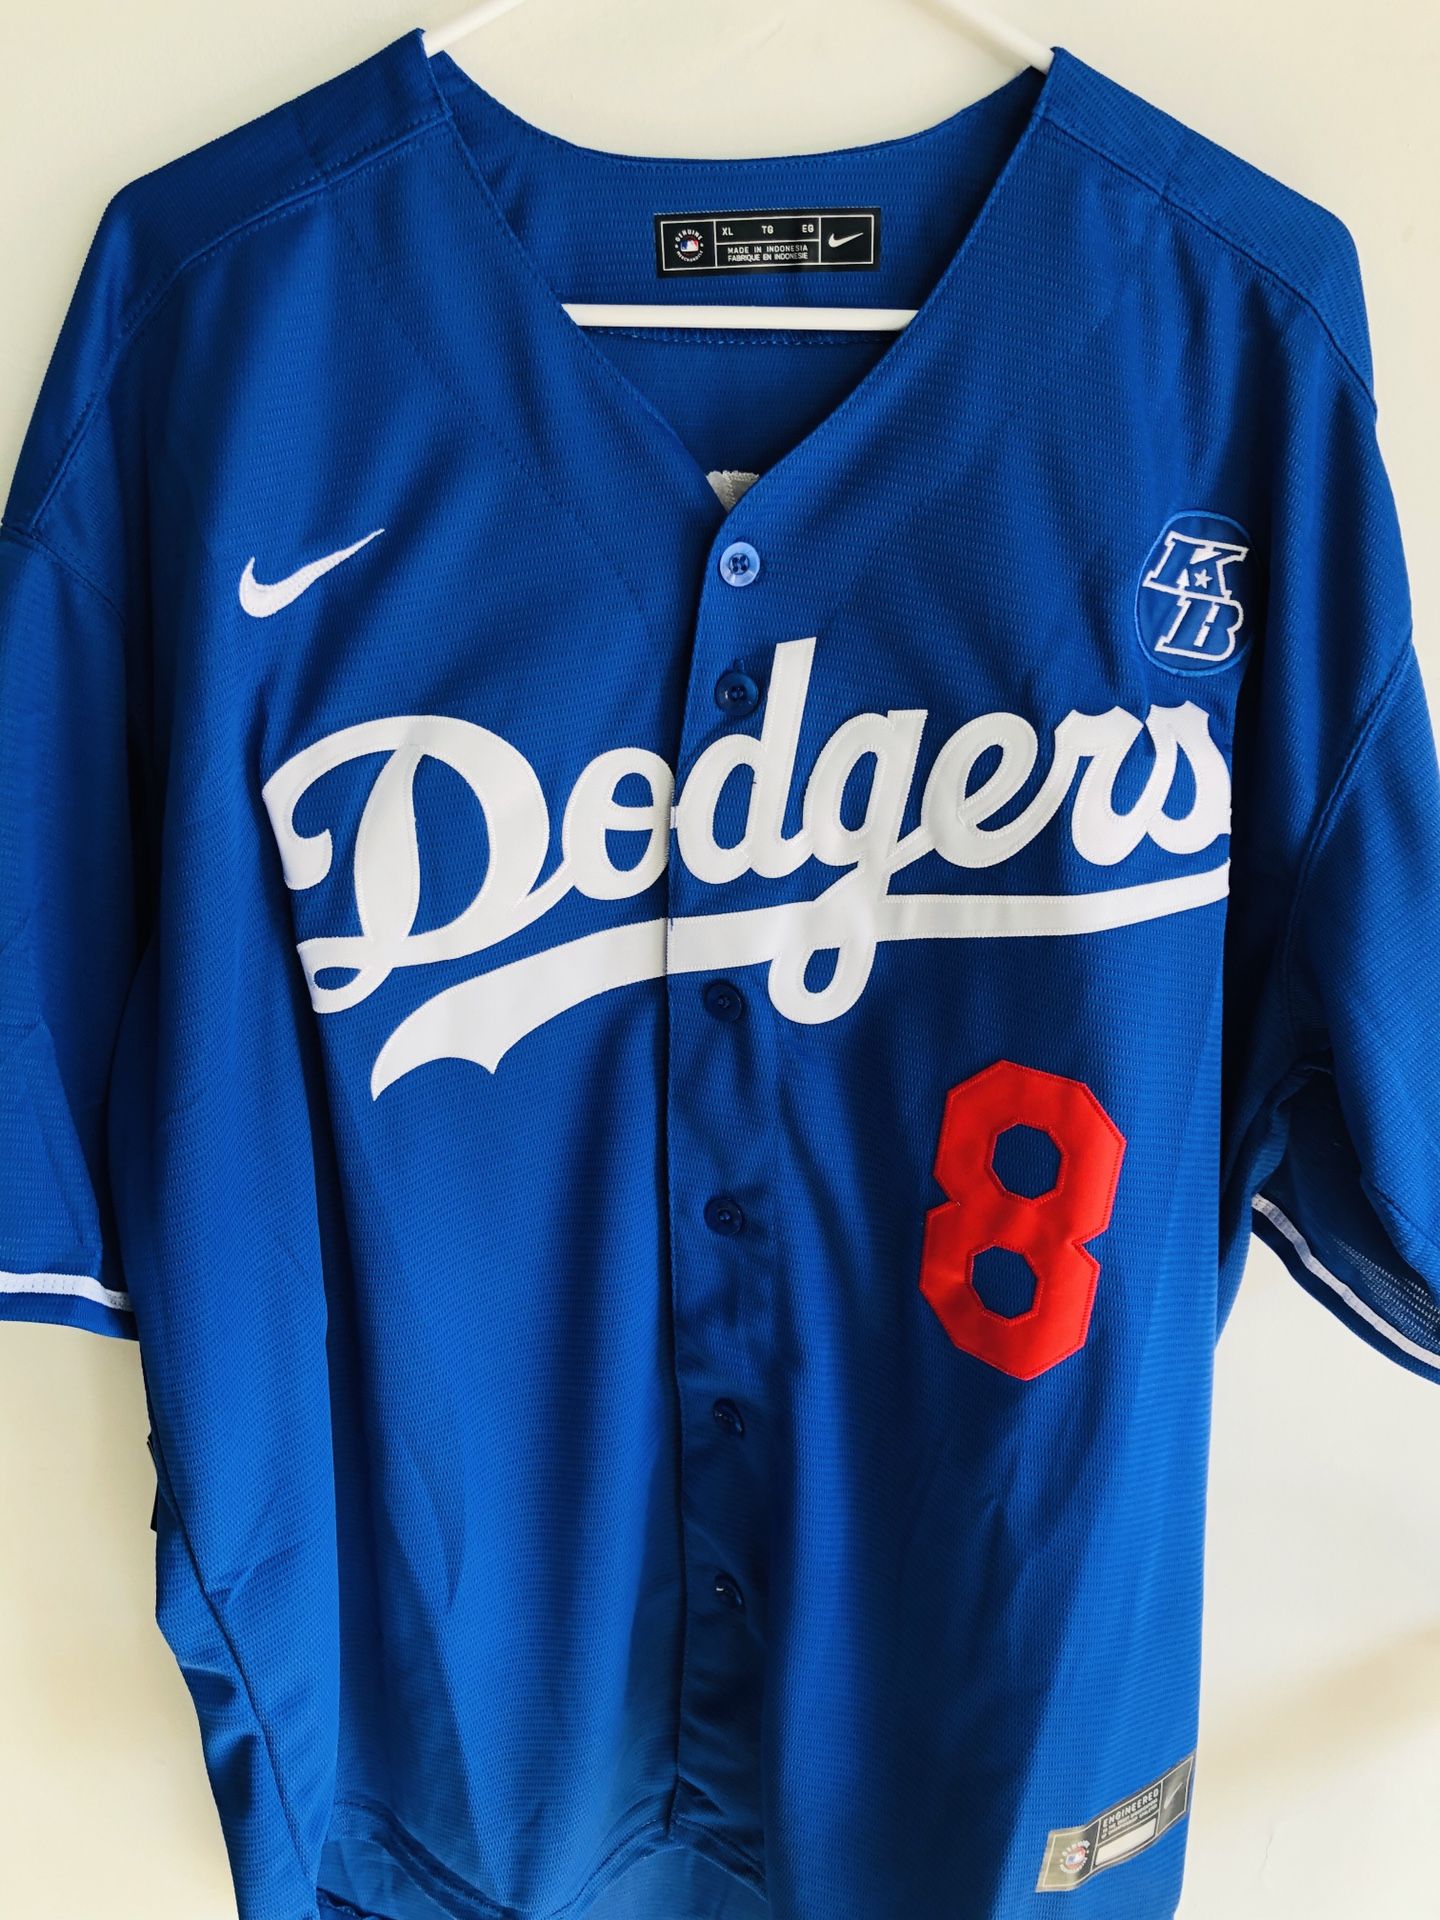 Dodgers Kobe jersey